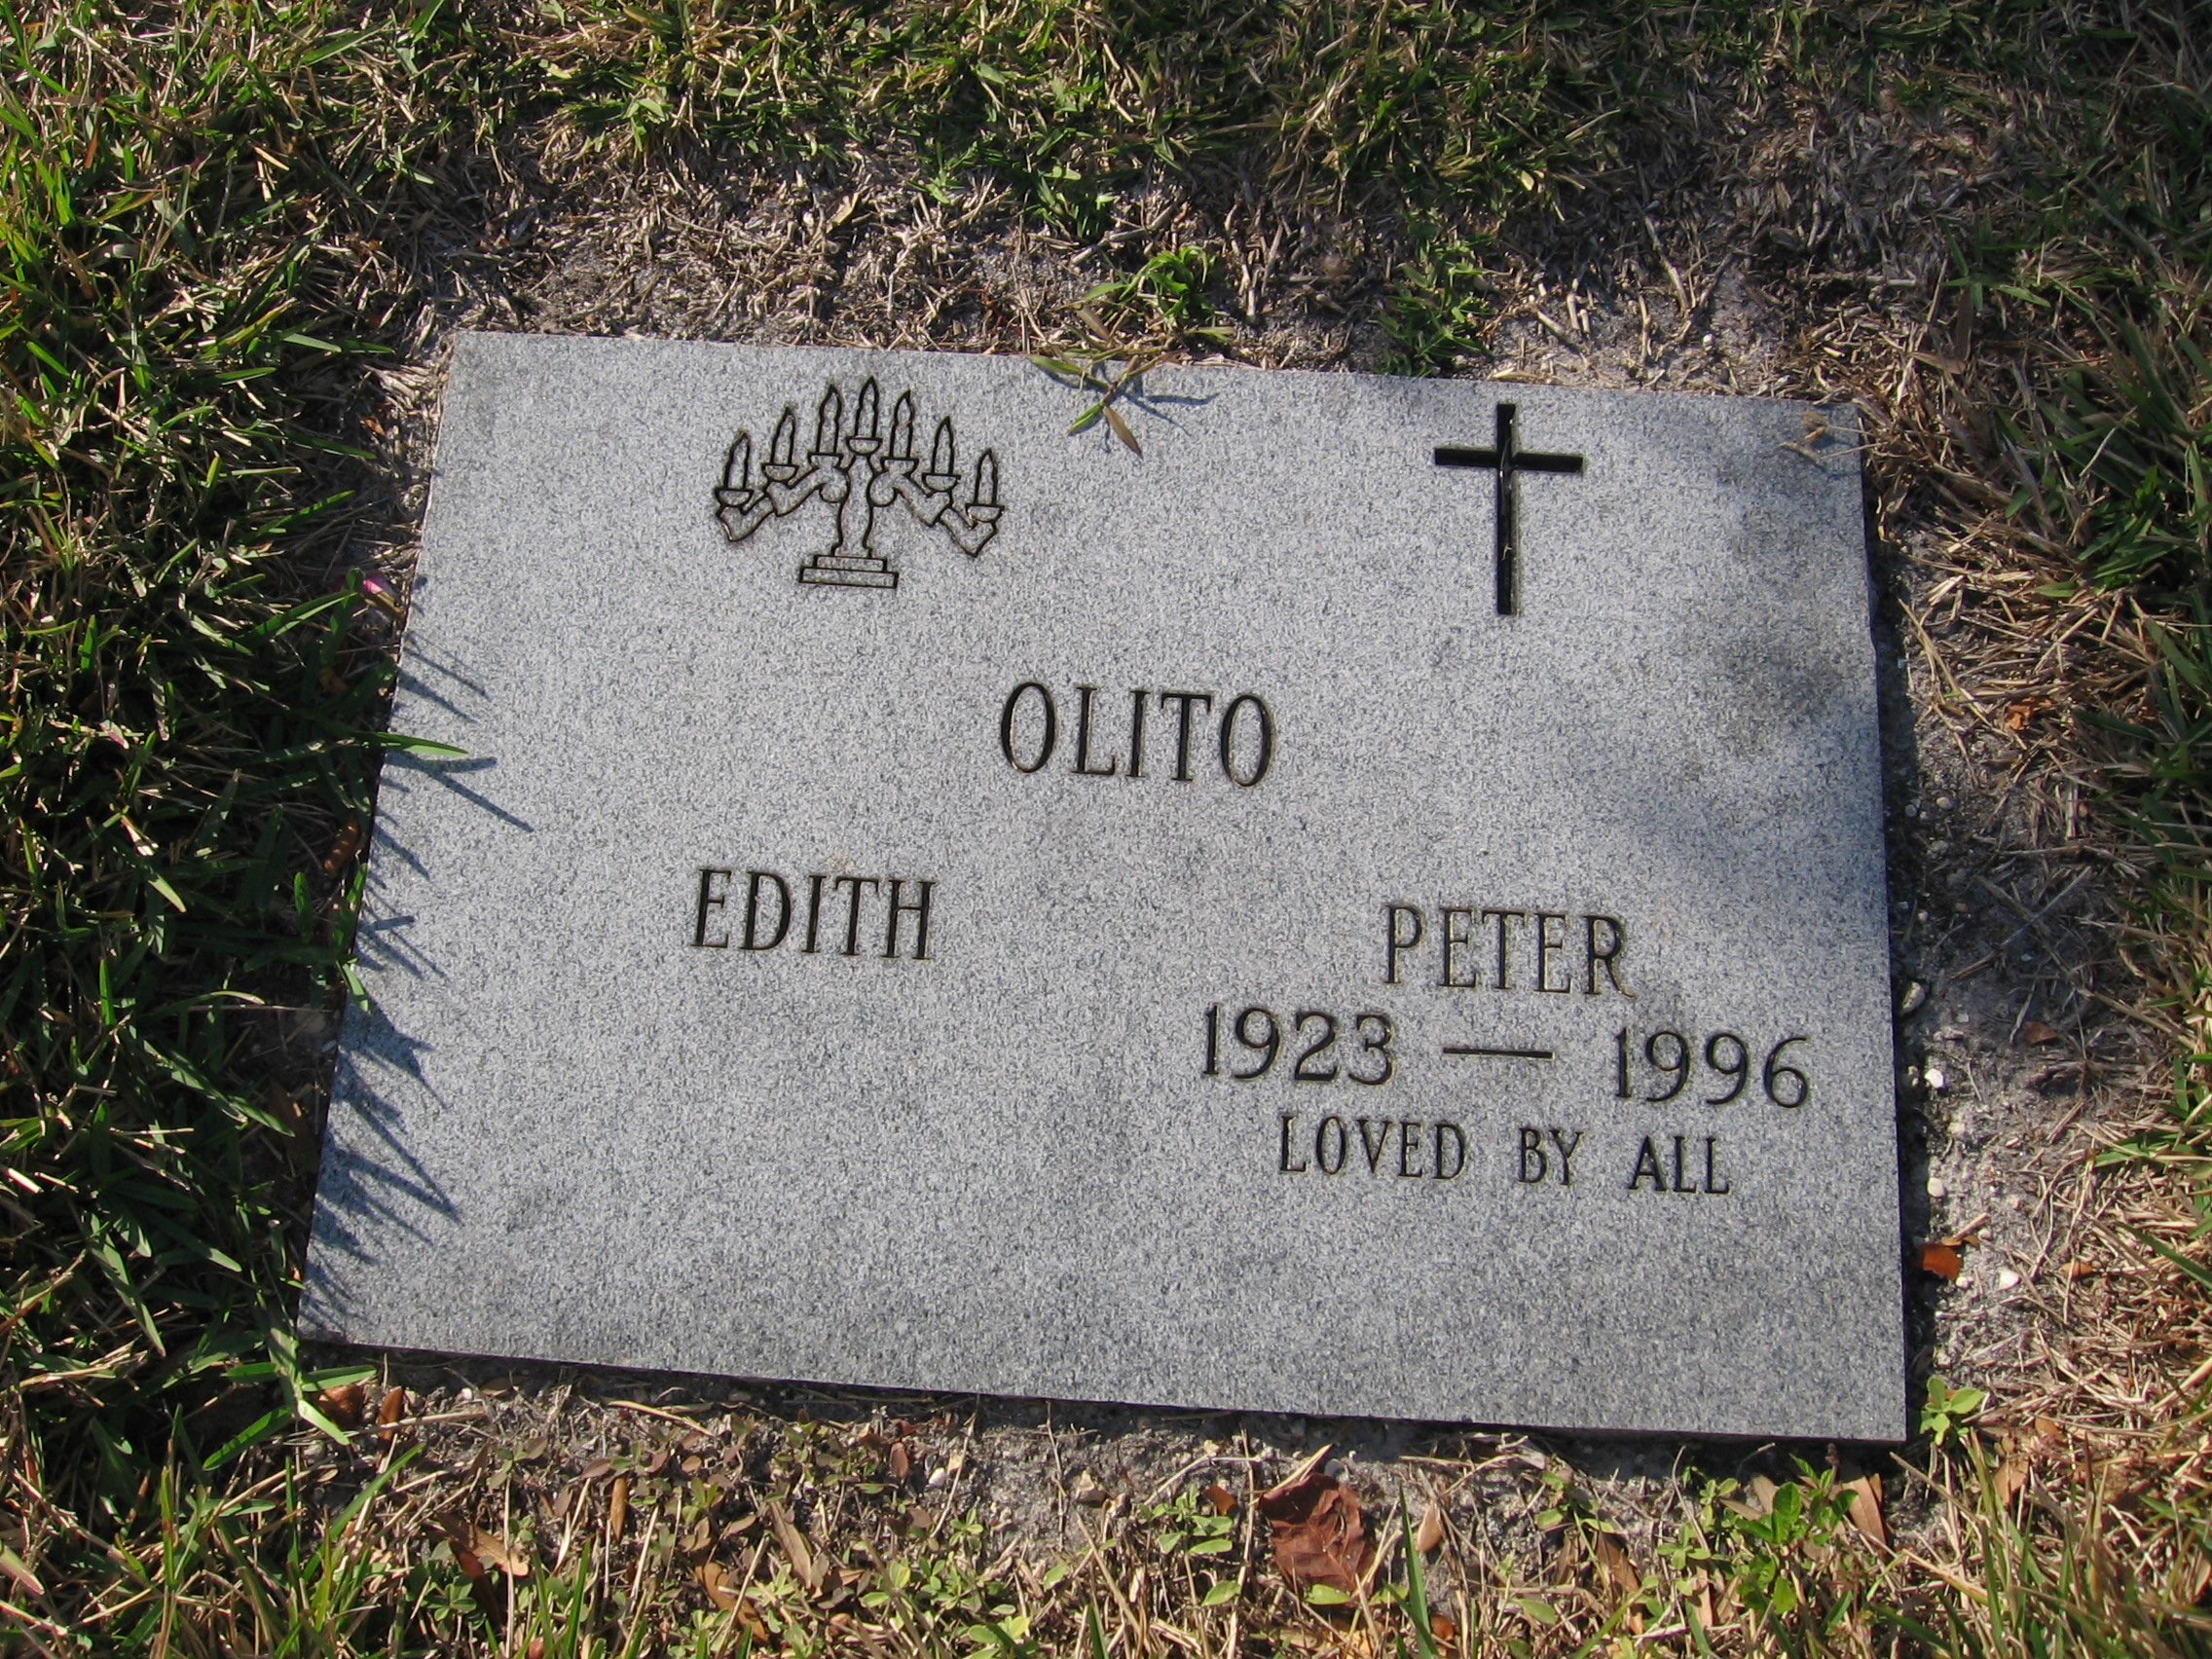 Peter Olito